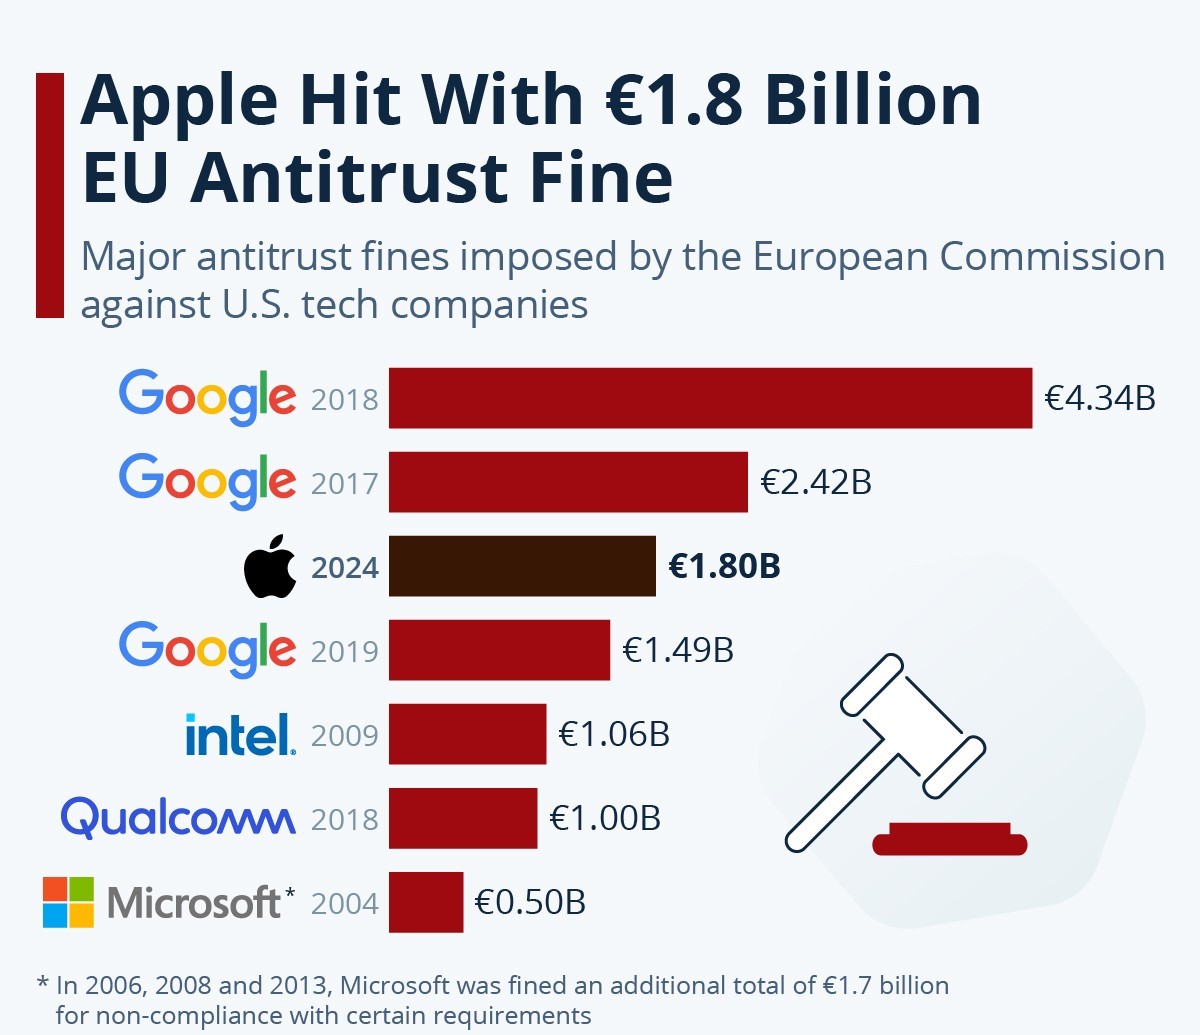 Apple Slapped with €1.8 Billion EU Antitrust Fine Over App Store Rules